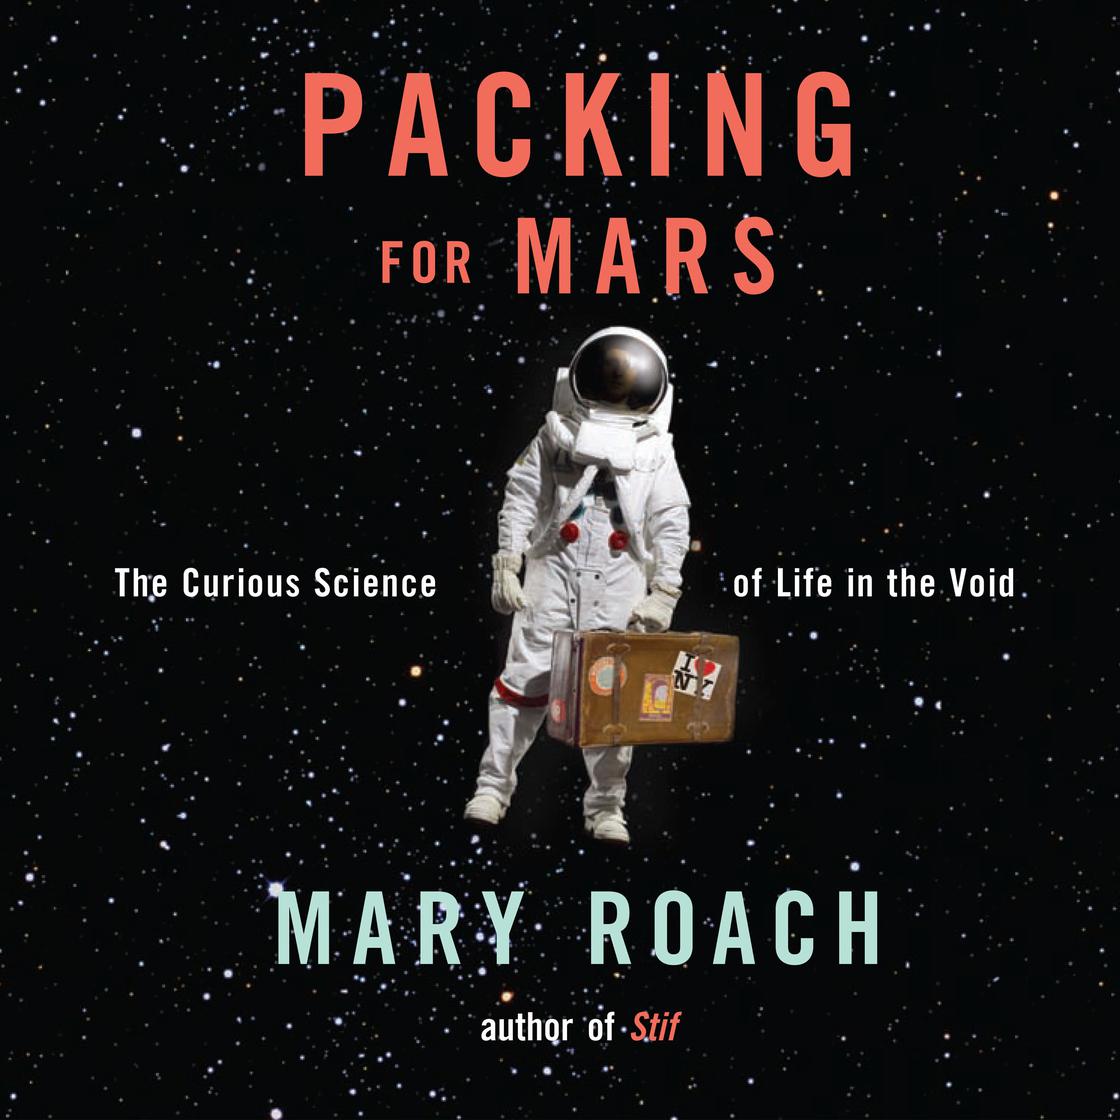 Packing for Mars (AudiobookFormat, 2010, Brilliance Audio)